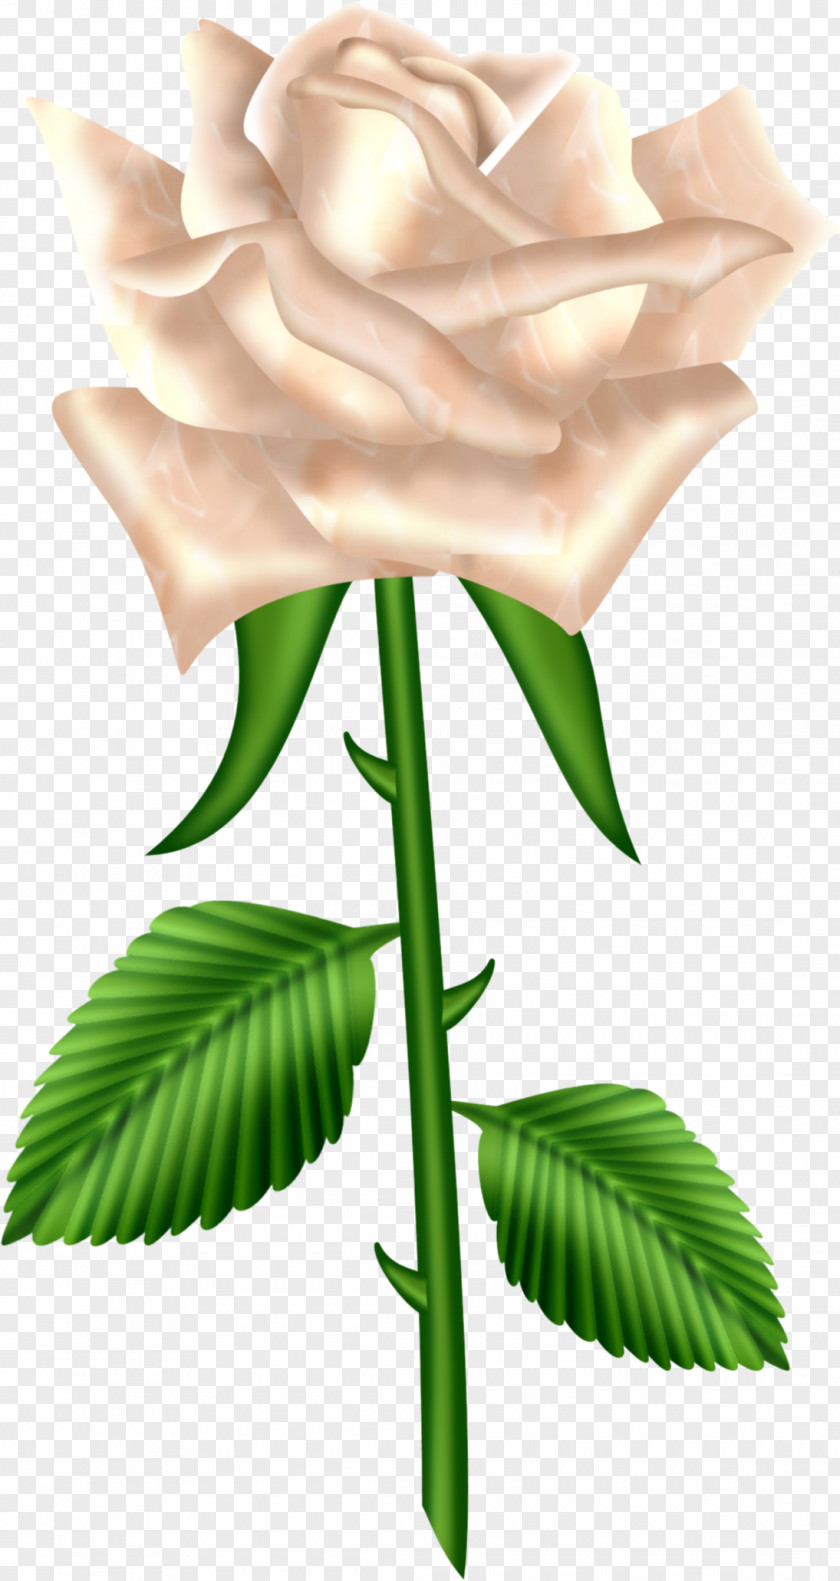 White Rose Clip Art PNG